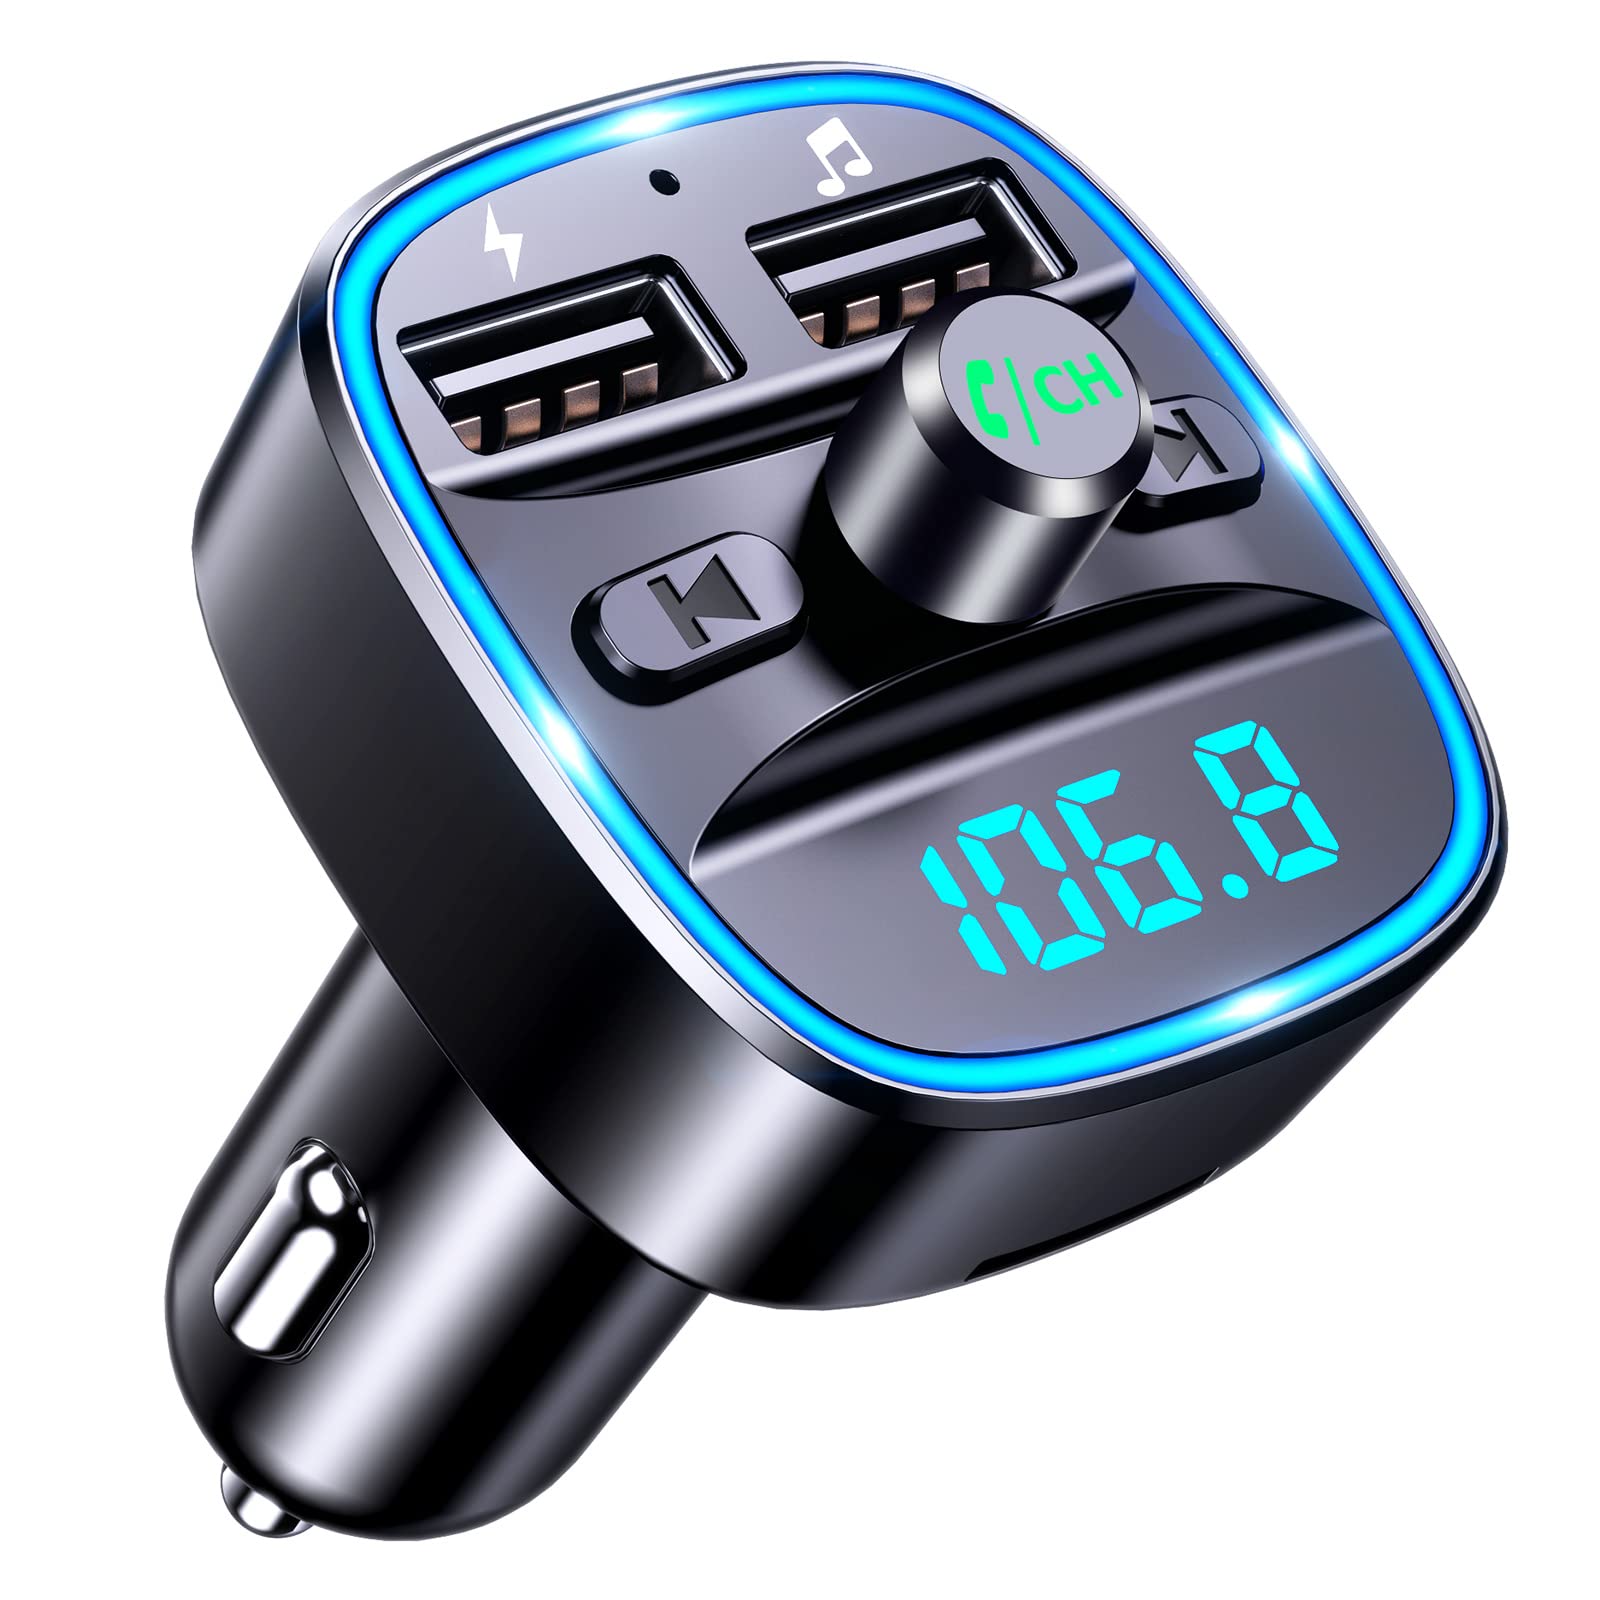 Mohard Bluetooth FM Transmitter for Car, Bluetooth Car Adapter MP3 Player FM Transmitter, Hands-Free Calling, Dual USB Ports (5V/2.4A & 1A), LED Screen, Support TF Card & USB Flash Drive